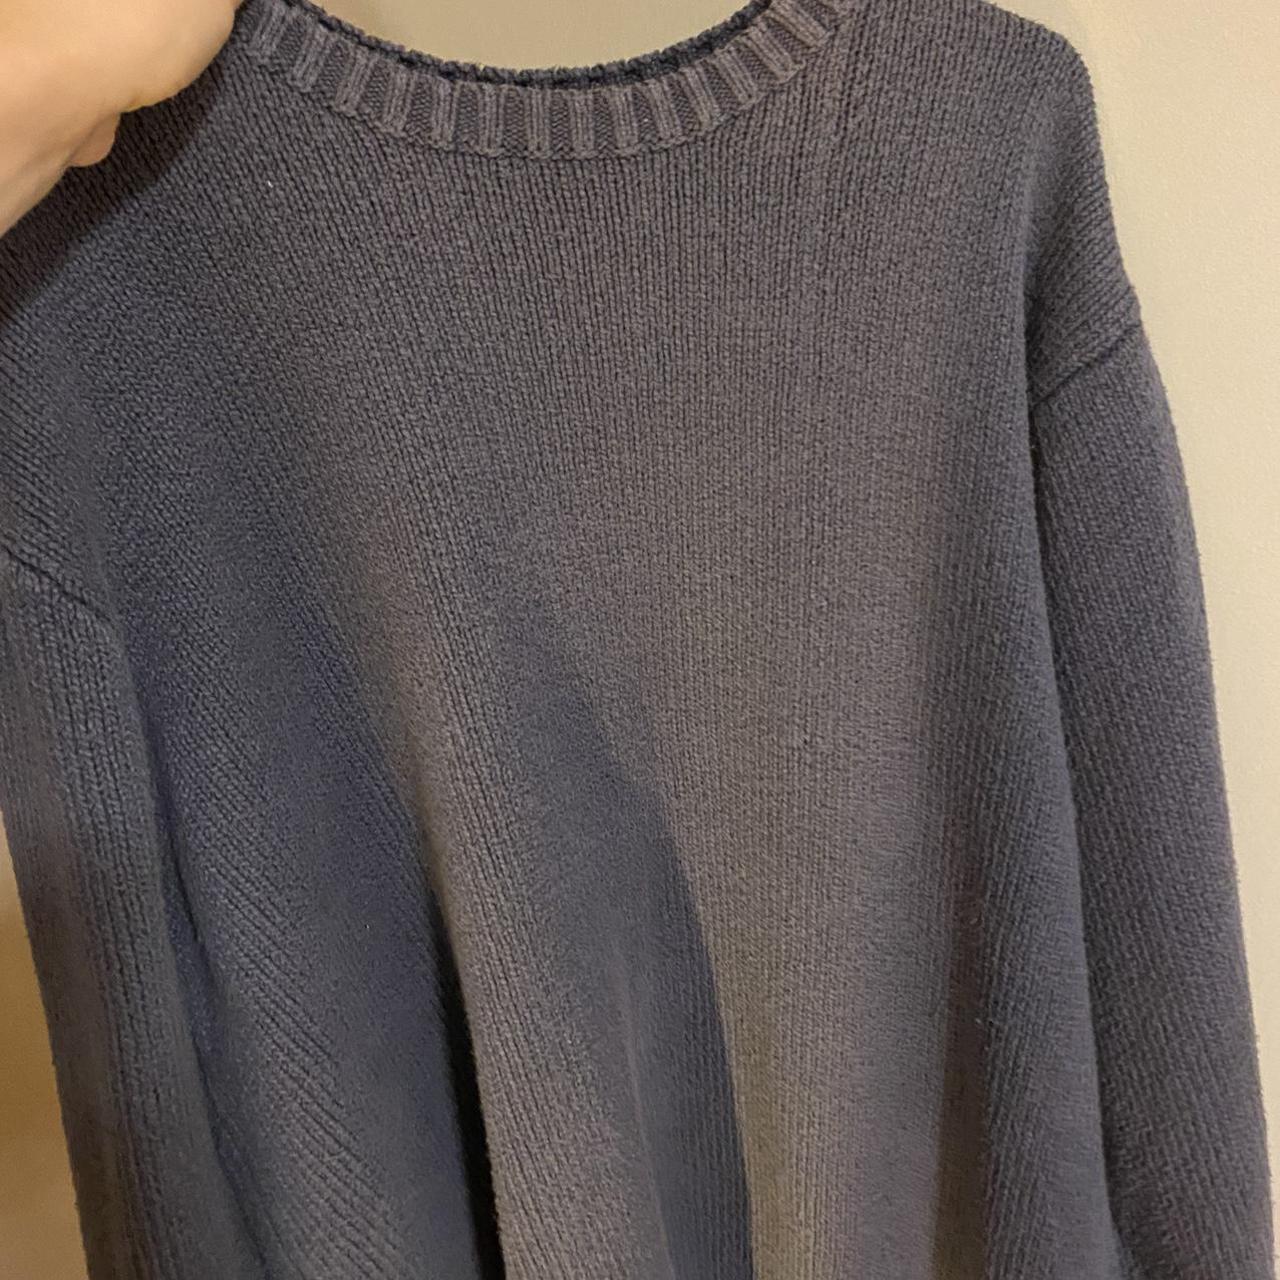 Brandy Melville Brianna cotton knit sweater jumper... - Depop